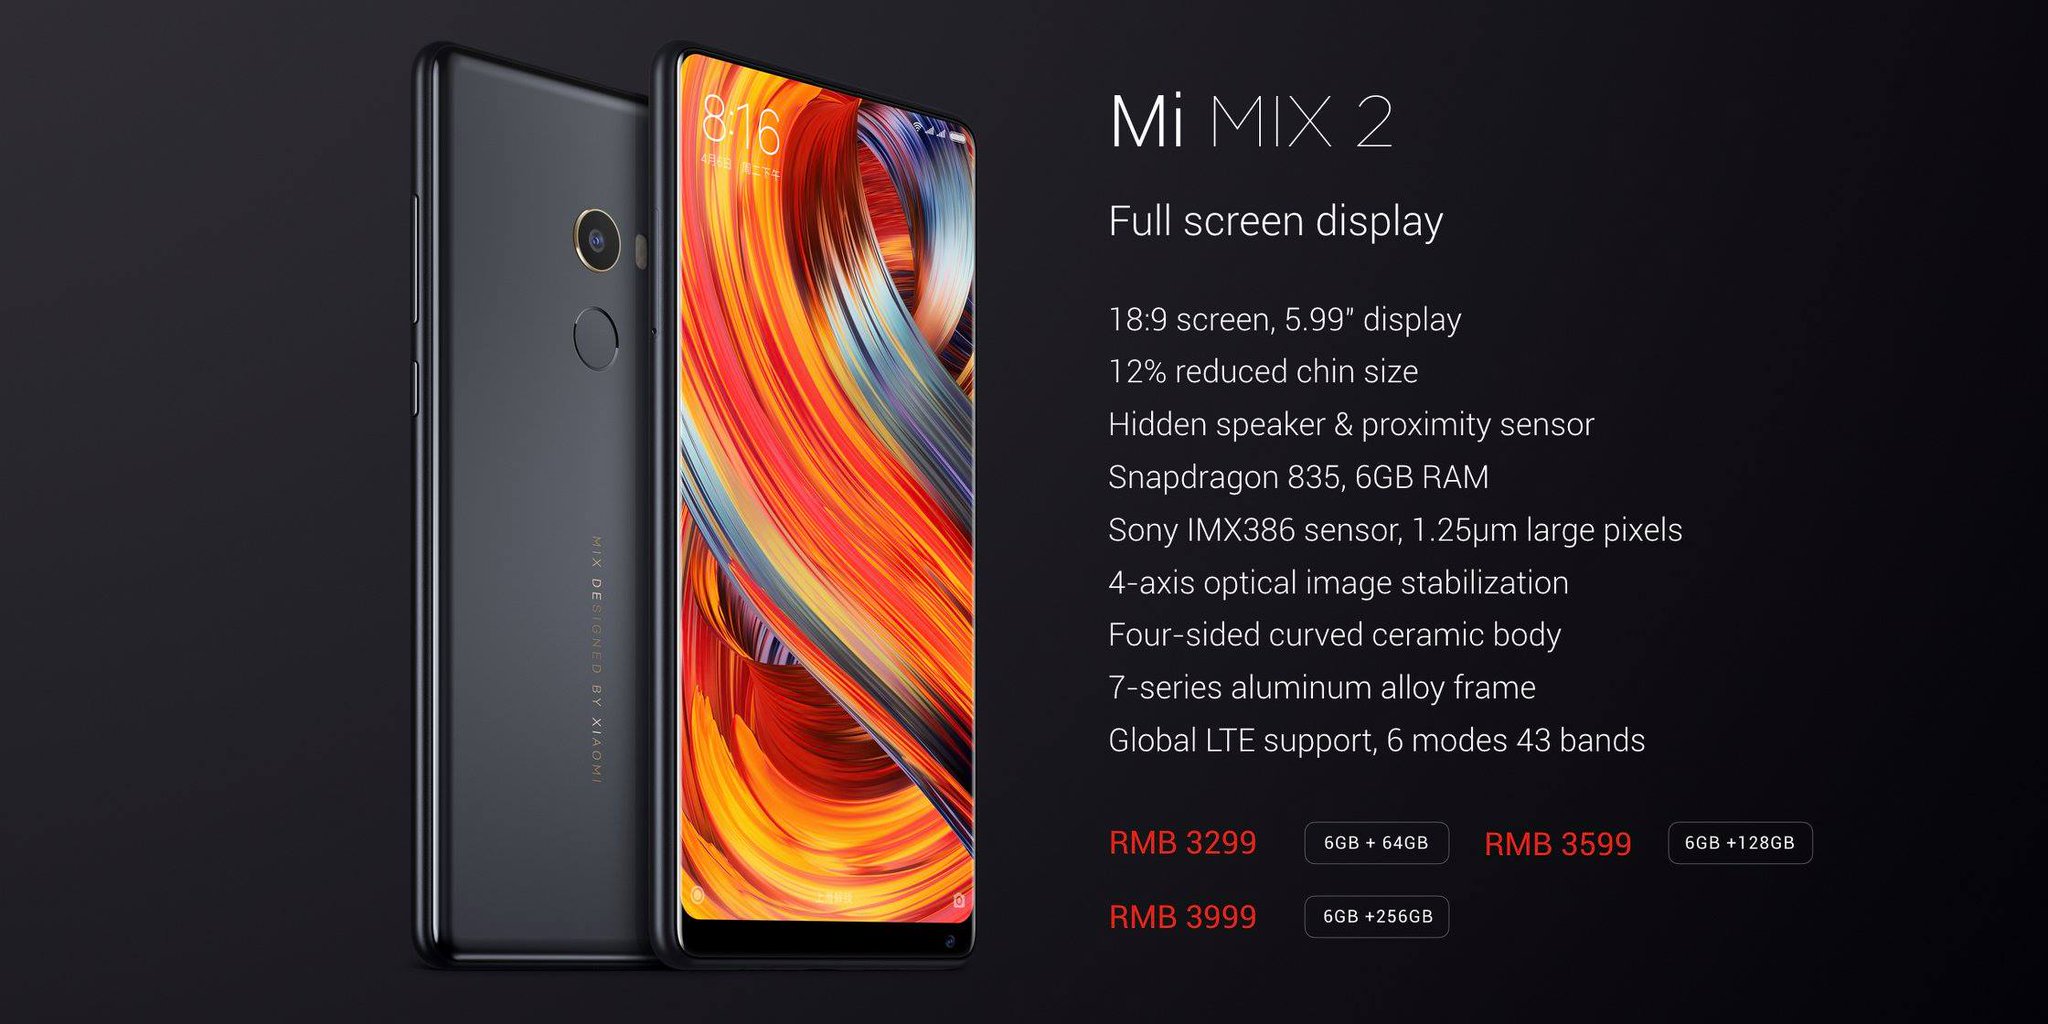 Xiaomi On Twitter Presenting Mimix2 Rt If You Love It Pretty Please